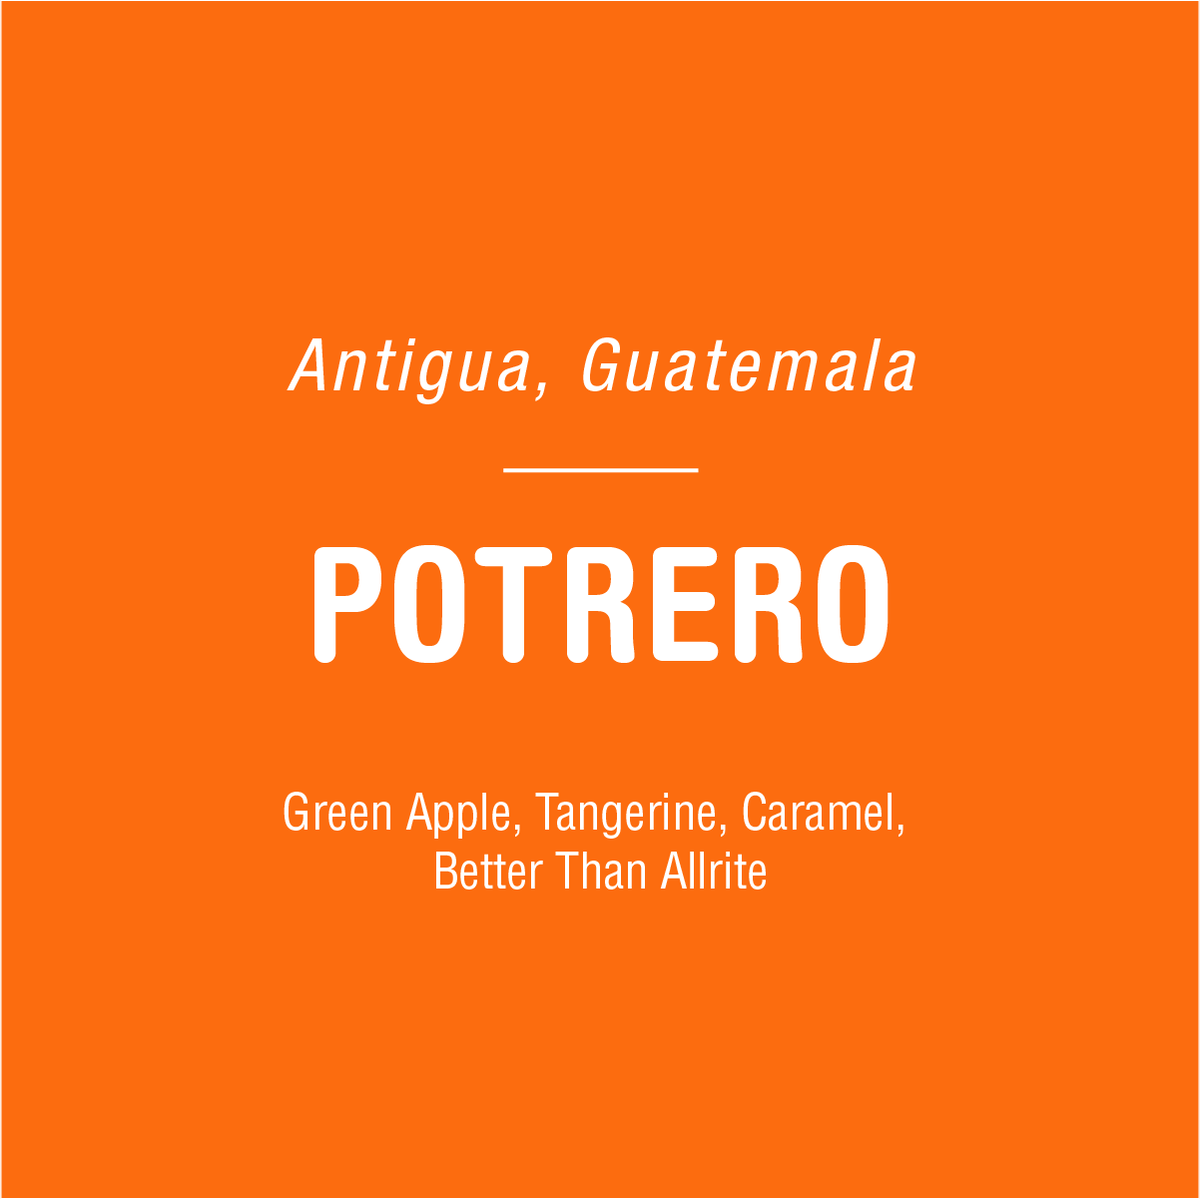 Potrero - Guatemala